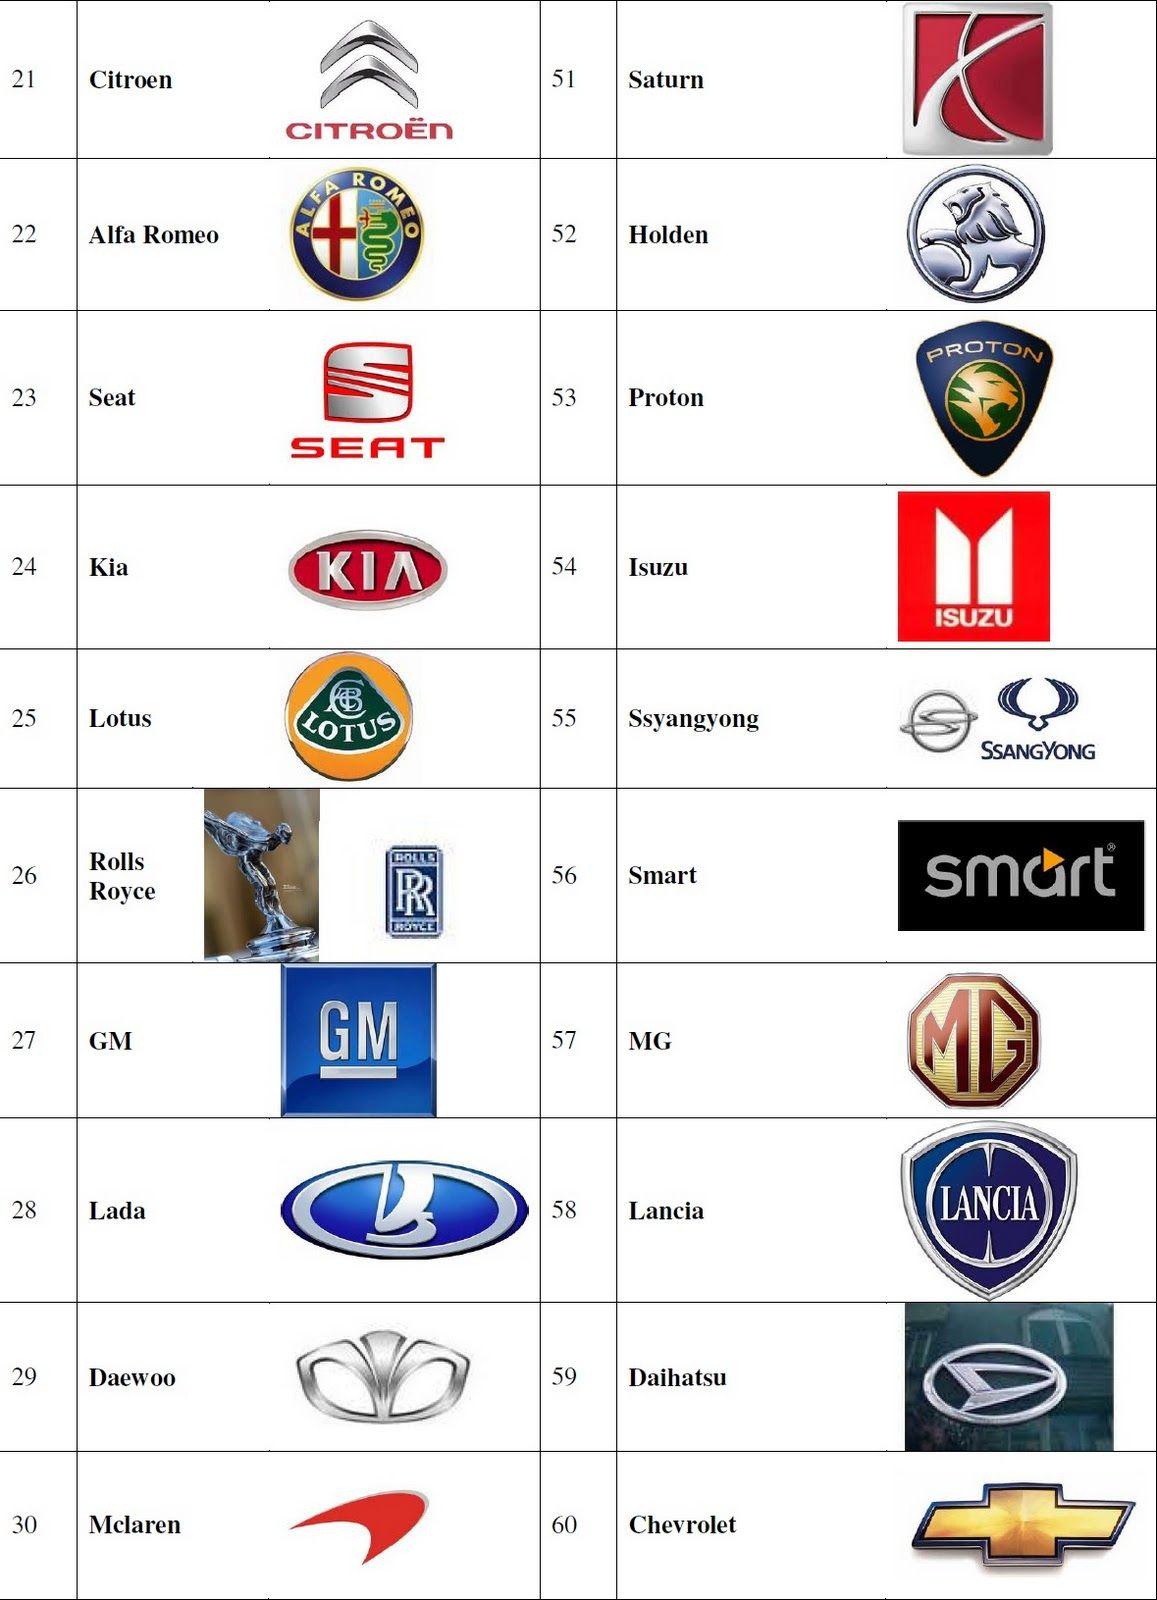 Automotive Industry Logo - Automobile Industry through my eyes: Car Company / Brand Logos